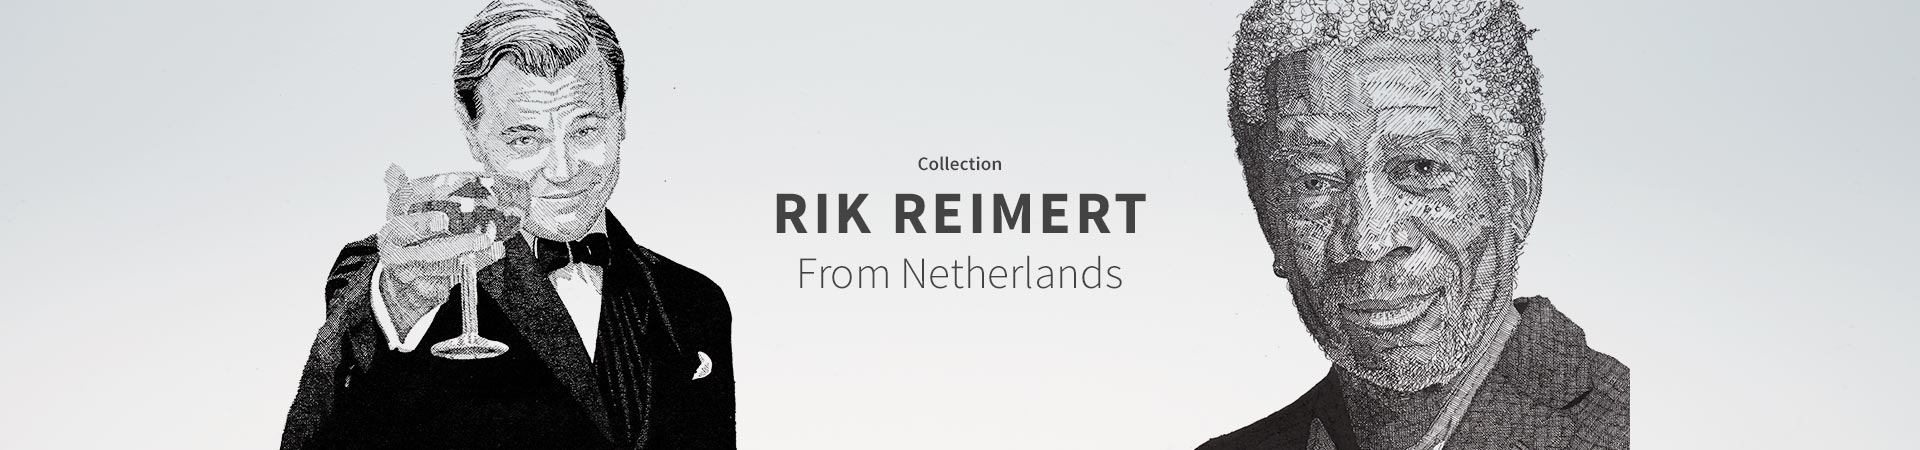 Collection Rik Reimert